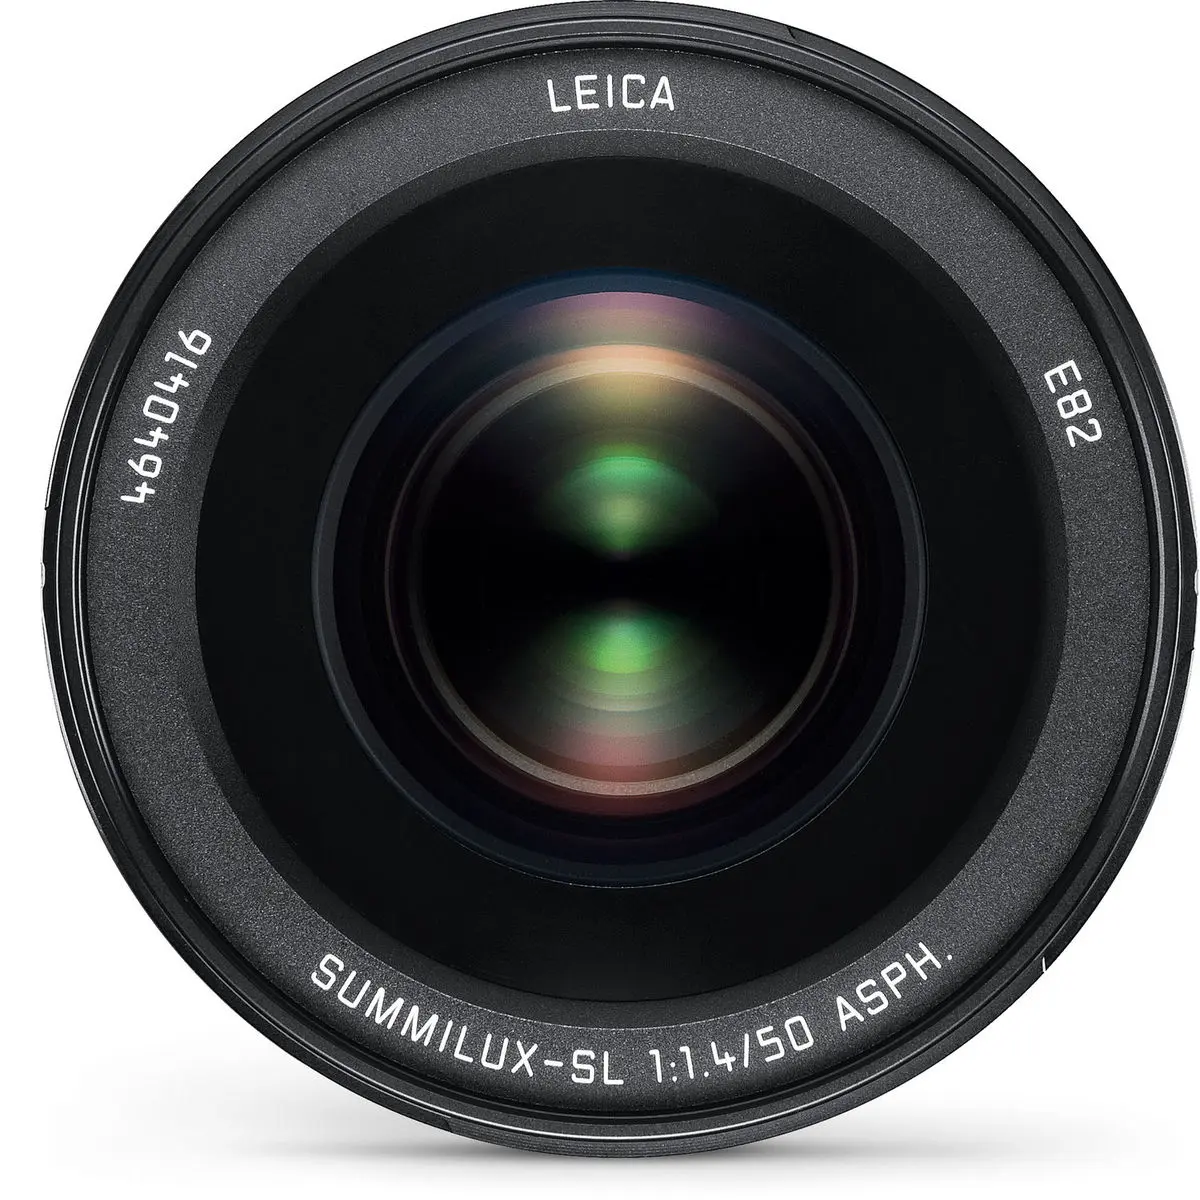 2. Leica Summilux-SL 50mm f/1.4 ASPH (11180) Lens